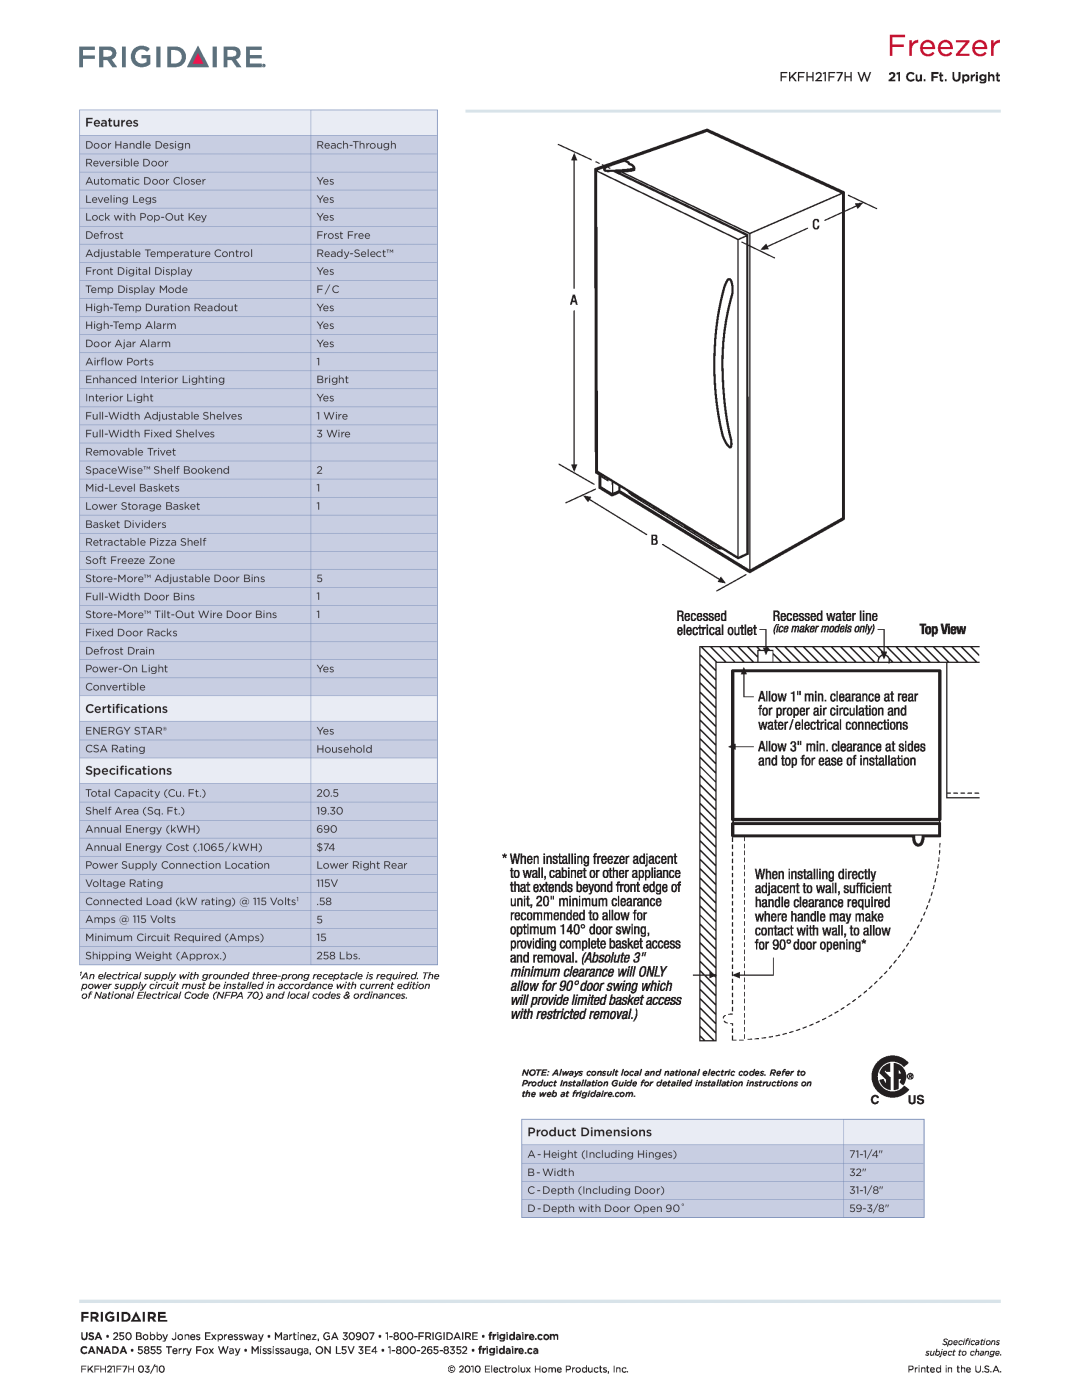 Frigidaire dimensions Freezer, FKFH21F7H W 21 Cu. Ft. Upright 